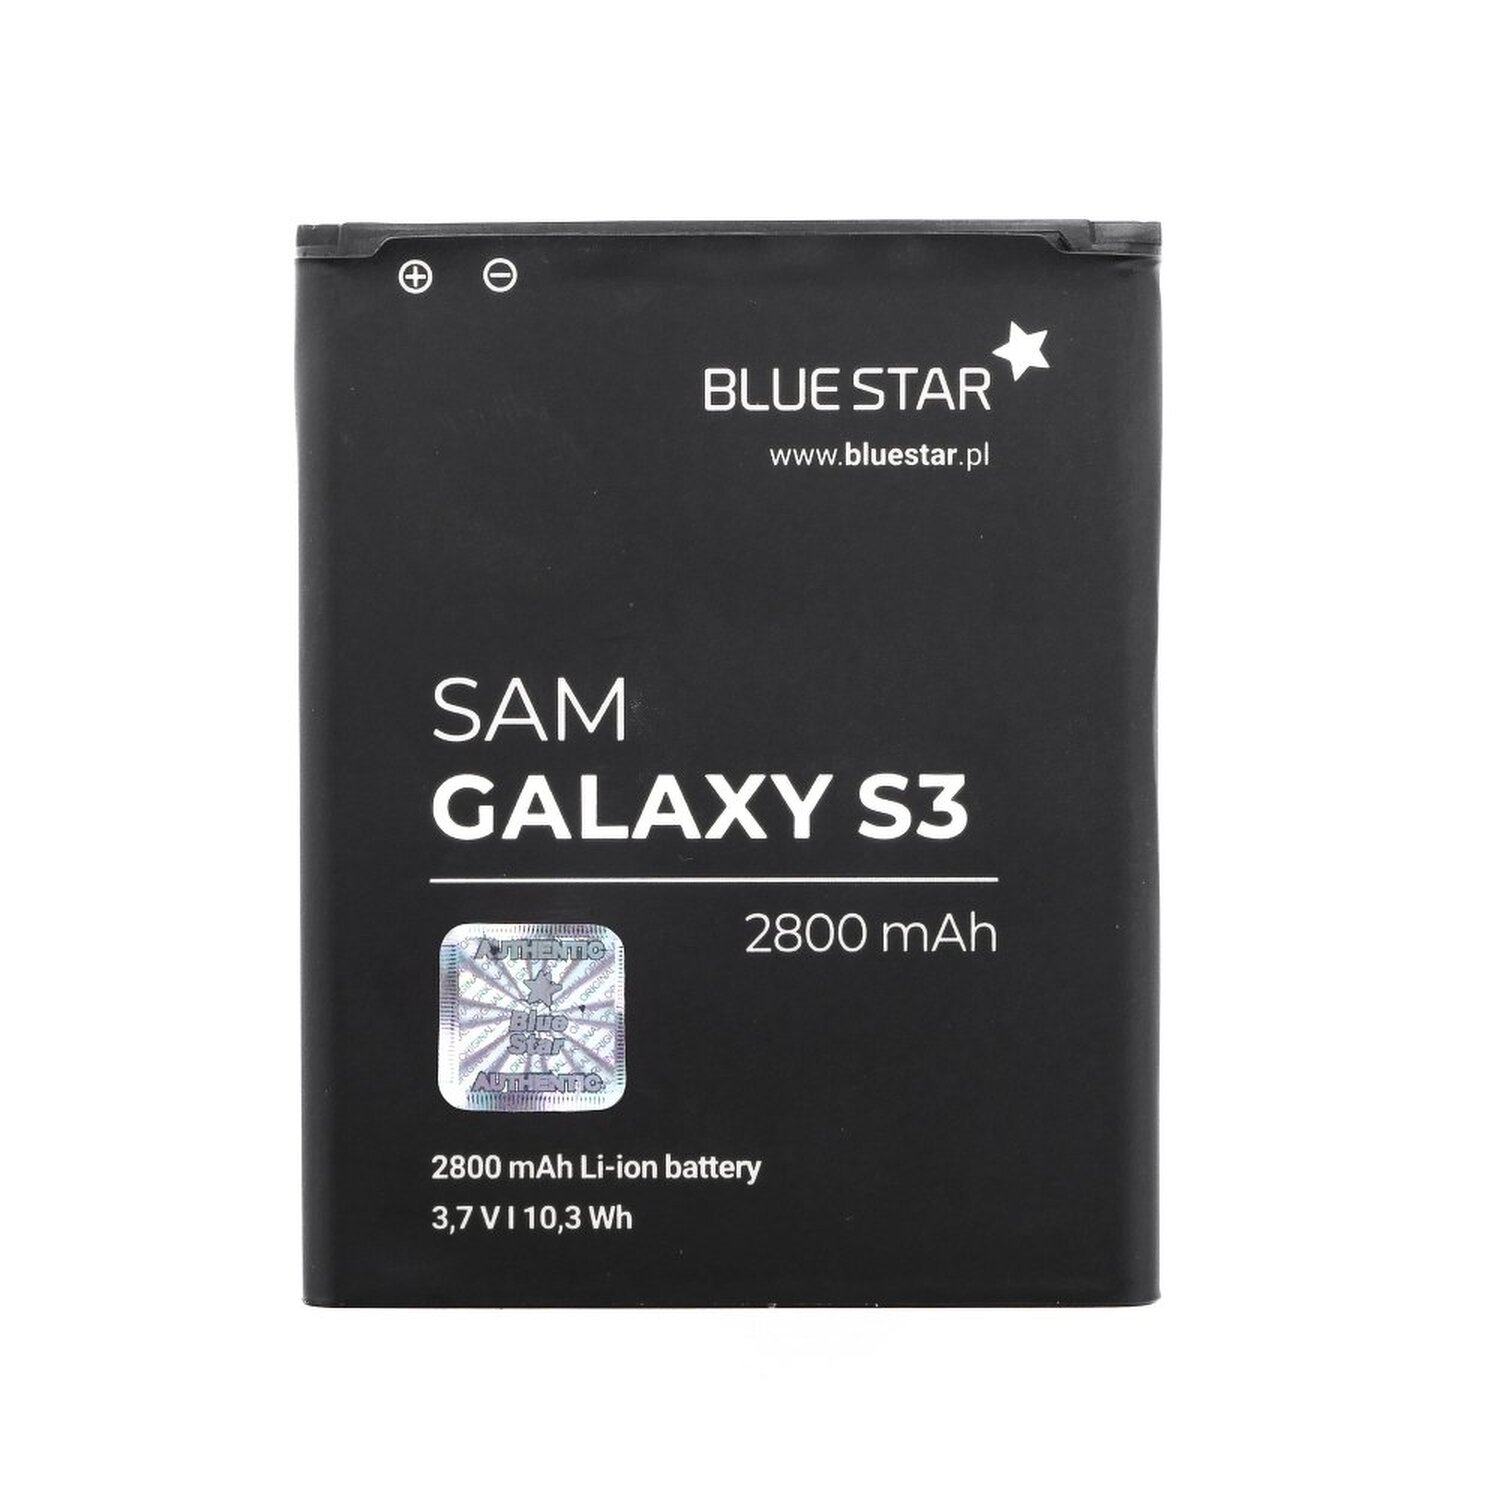 S3 BLUESTAR Samsung Galaxy Akku Li-Ion für Handyakku